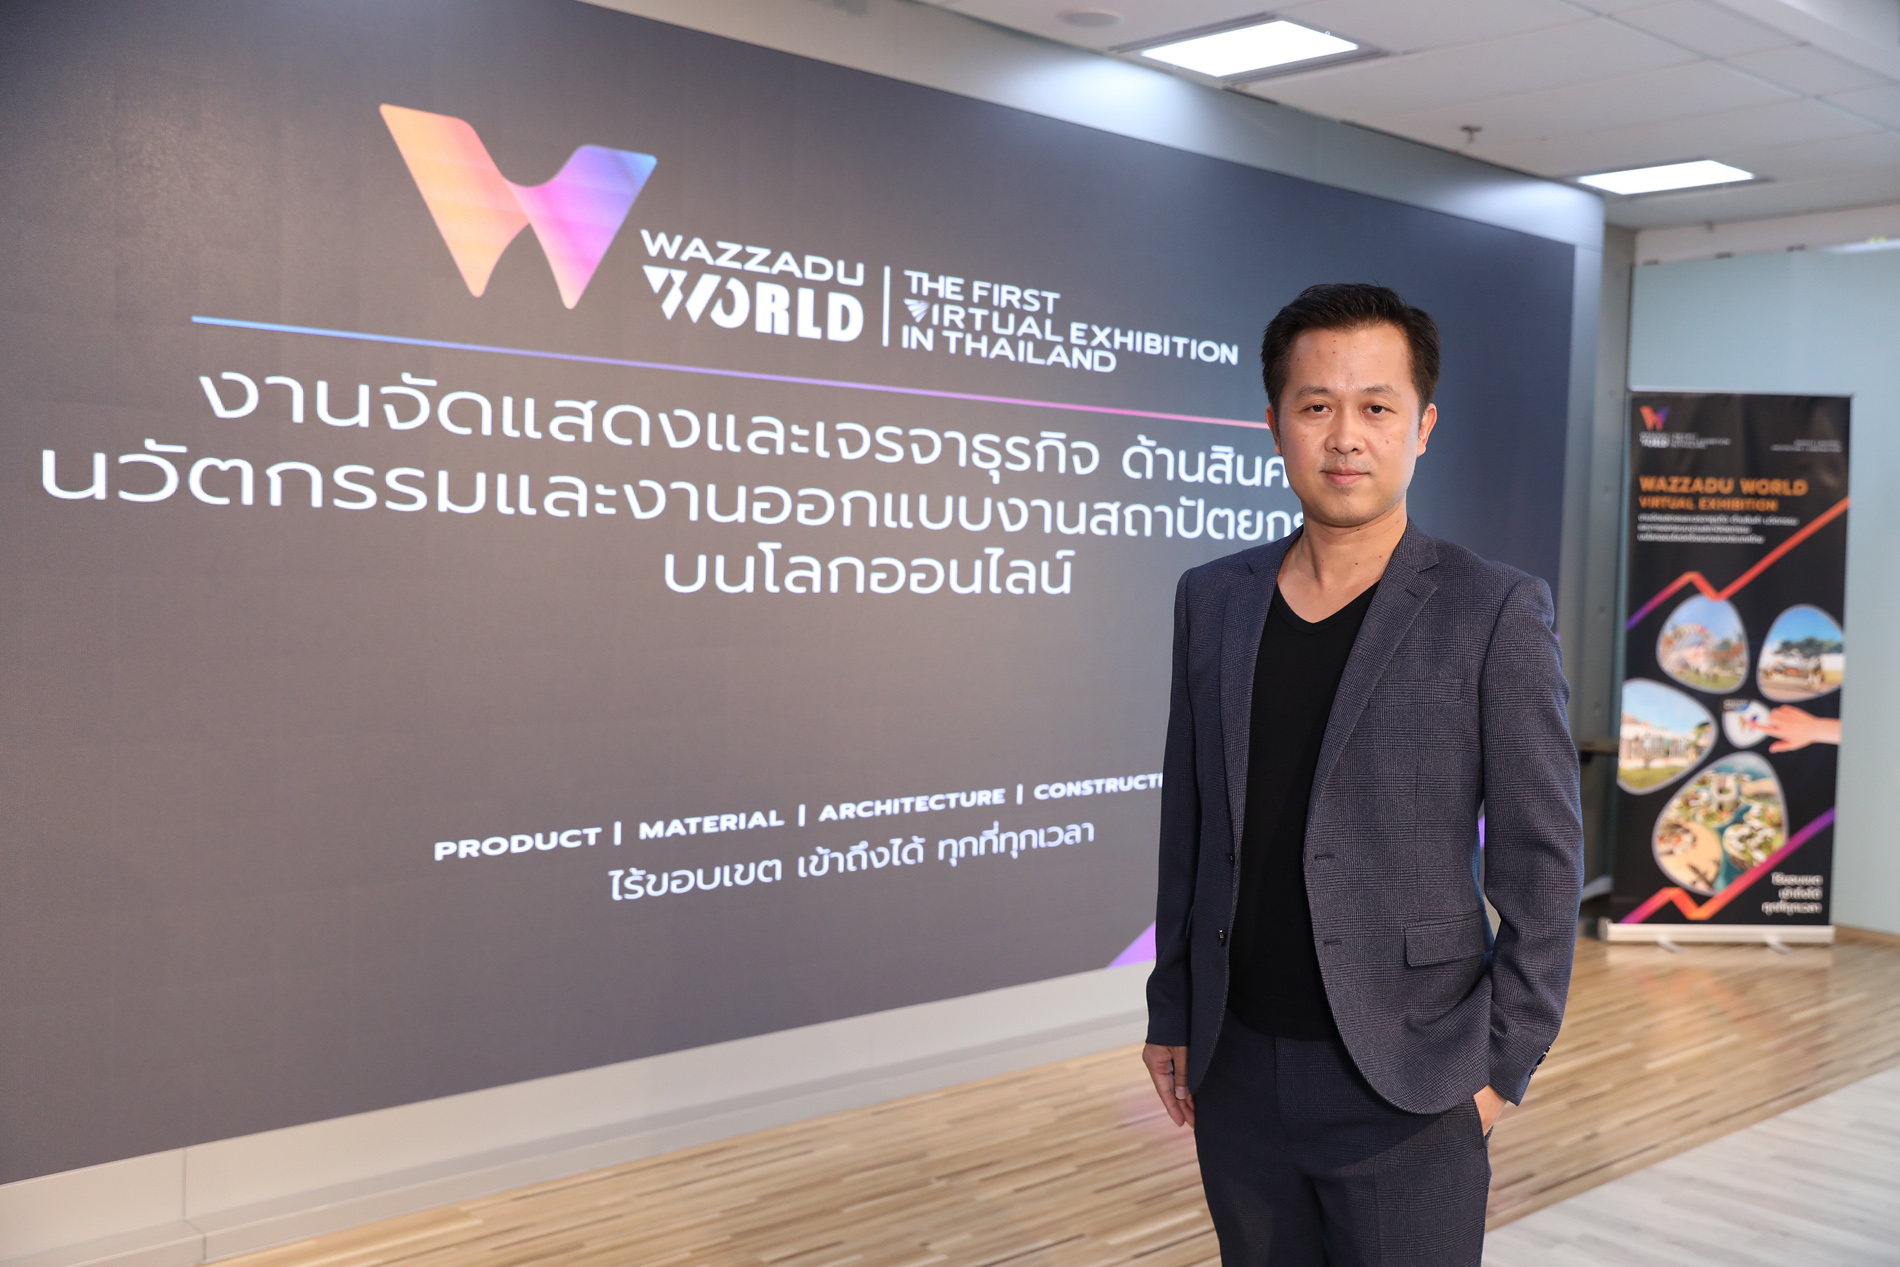 Wazzadu.com เปิดประสบการณ์ใหม่ให้วงการสถาปัตยกรรม จัดงาน Virtual Exhibition ครั้งแรกในประเทศไทย 9-15 กันยายนนี้